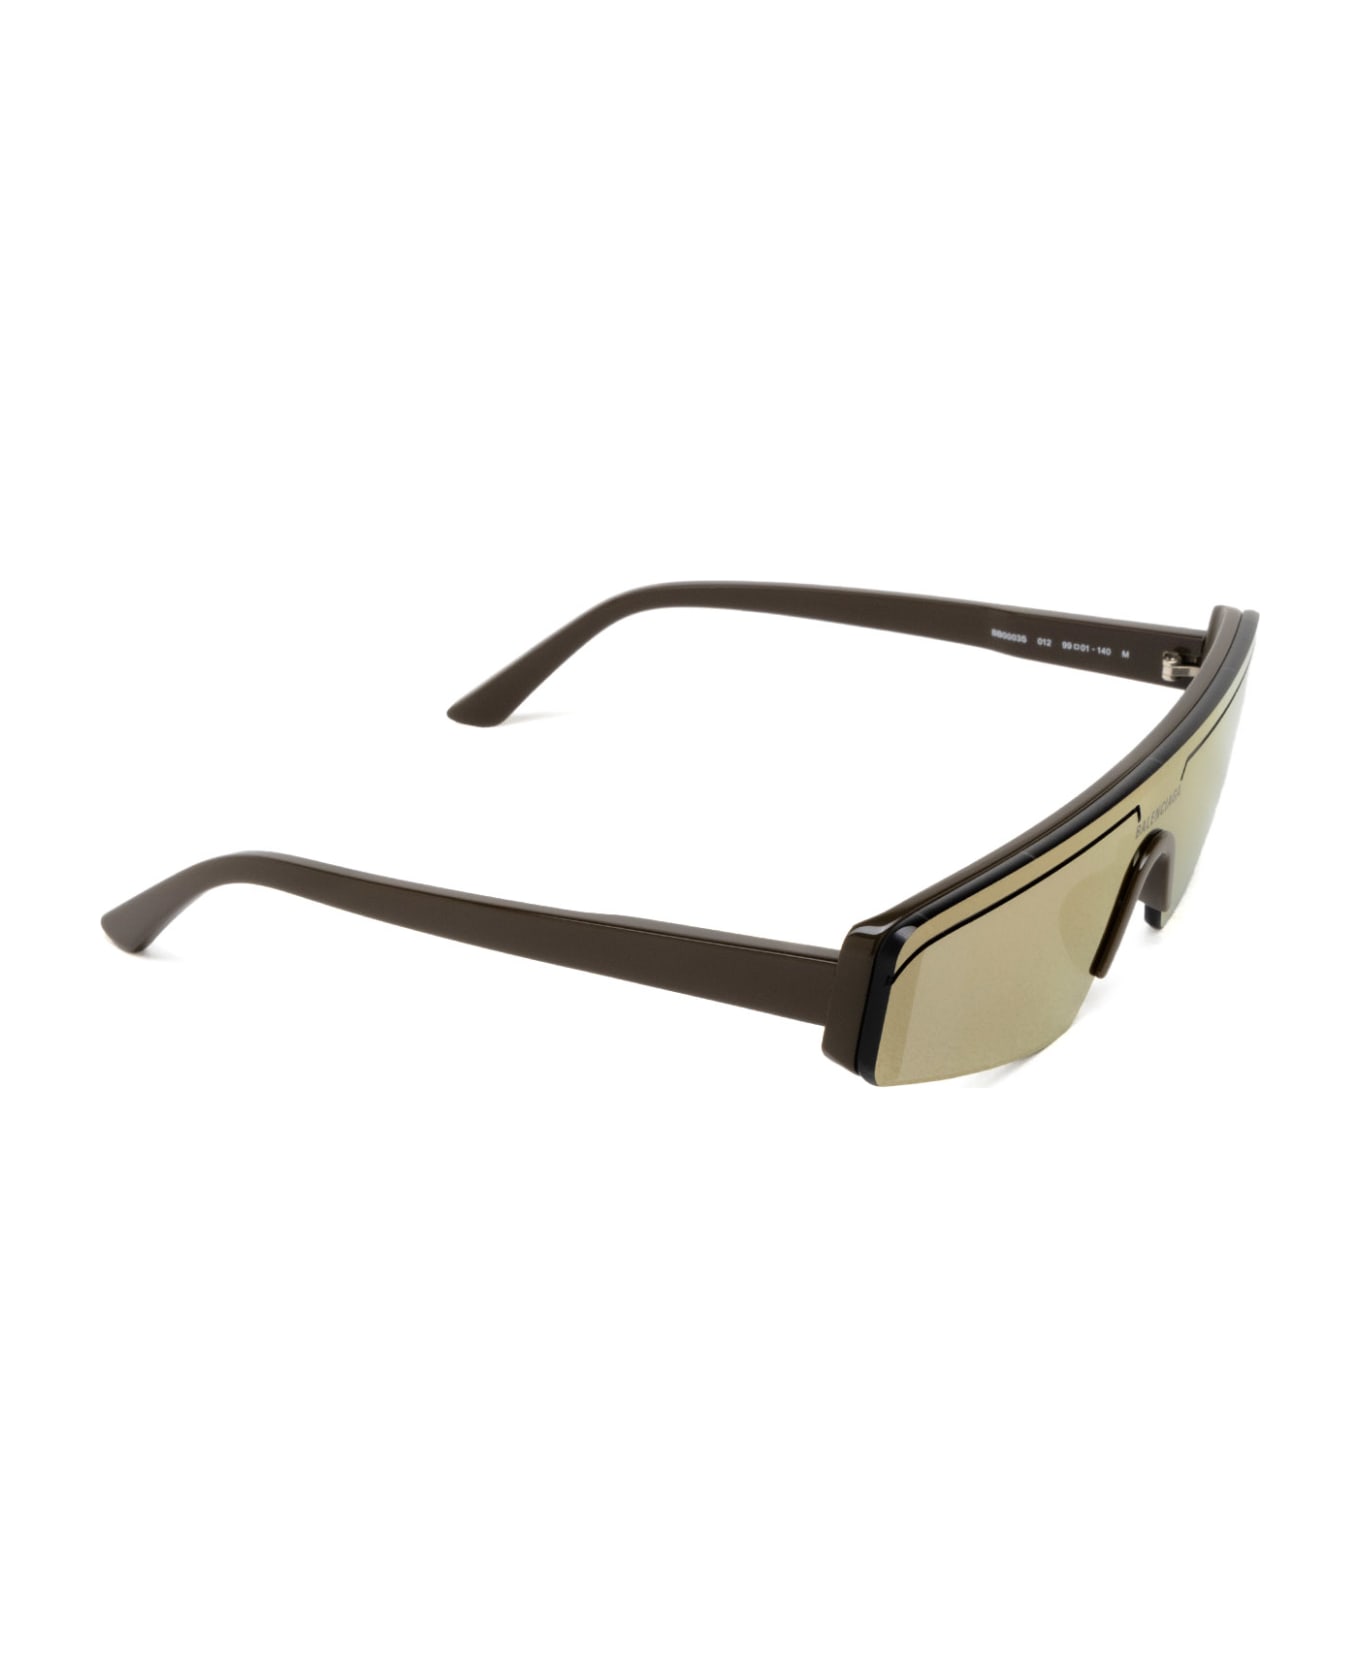 Balenciaga Eyewear Bb0003s Sunglasses - Brown